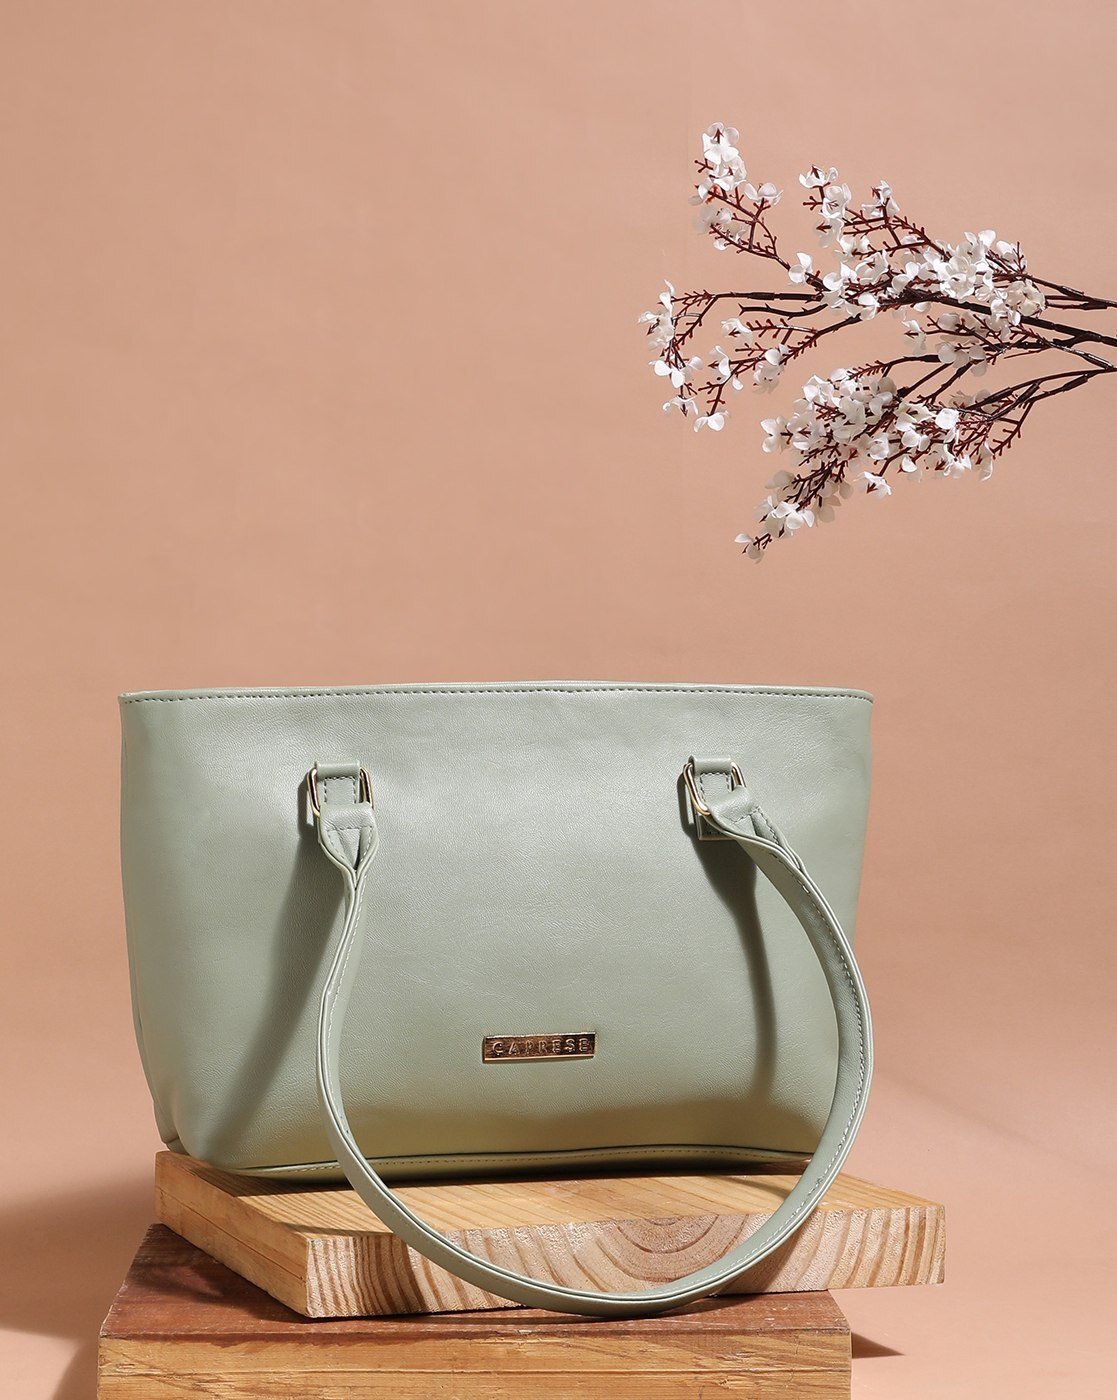 Buy Caprese TRESNA Embroidery Tote Brown Handbag at Amazon.in